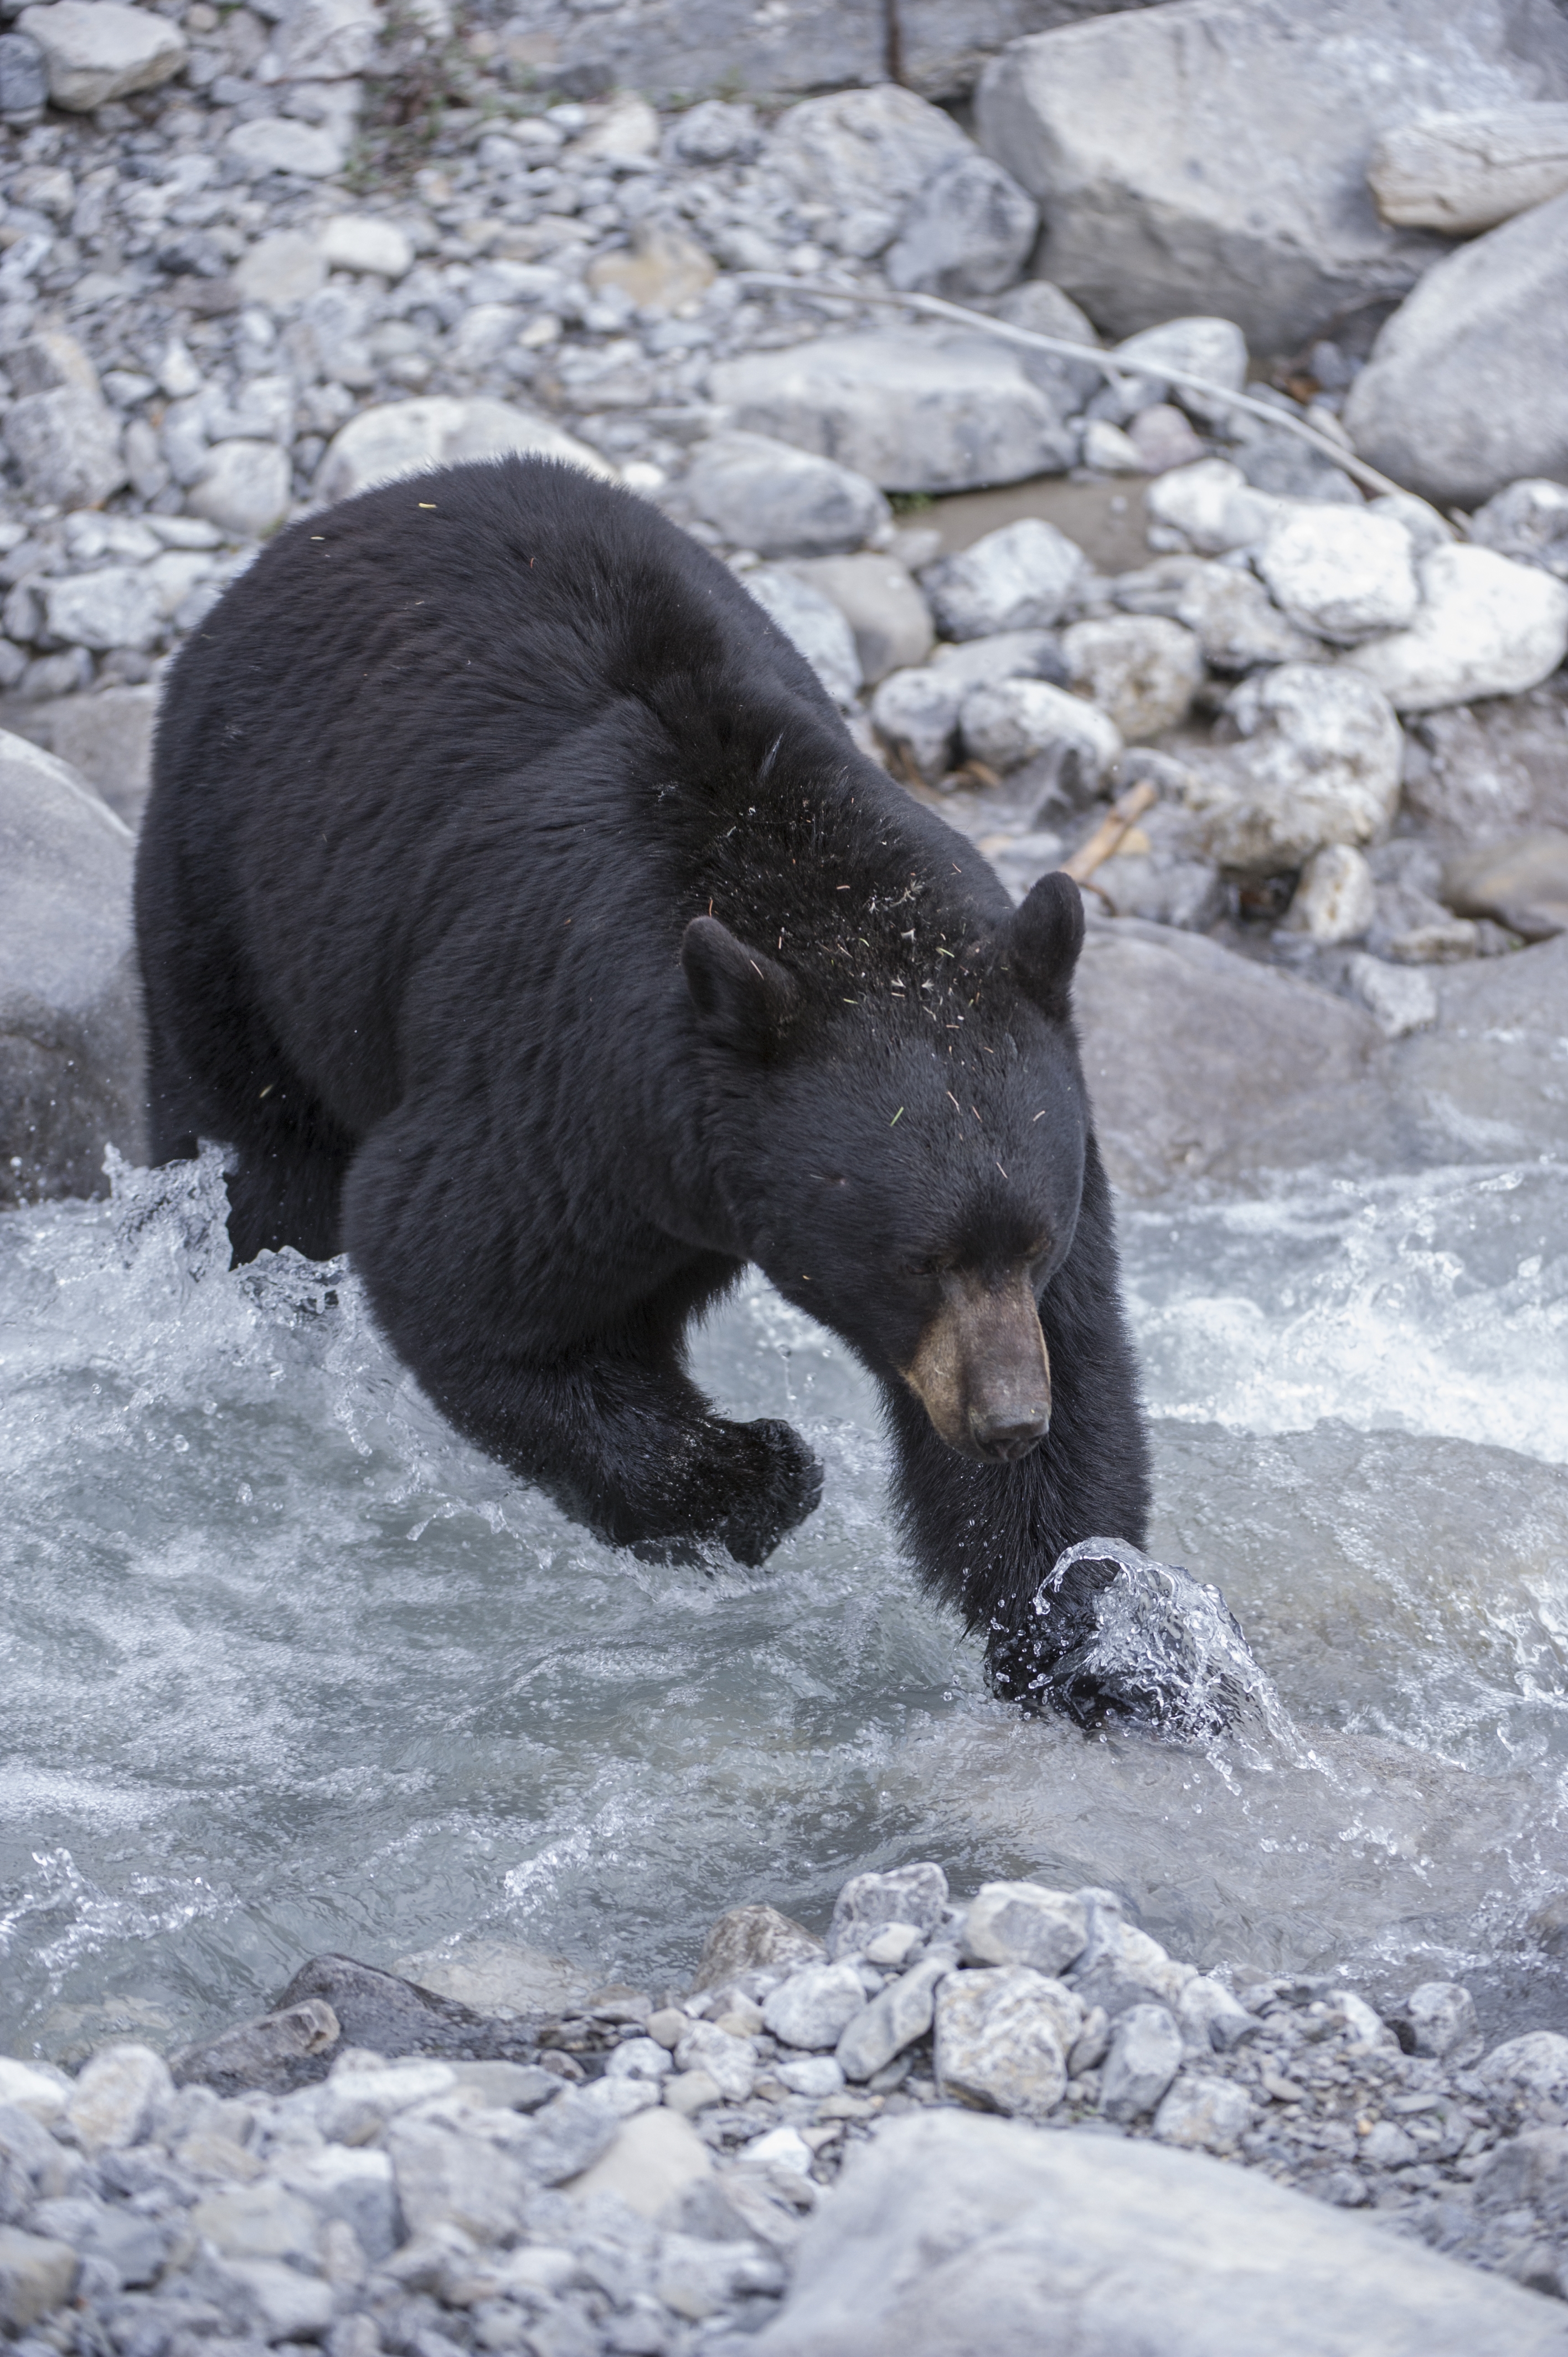 Bear season: Here's how Pennsylvania controls its largest predator